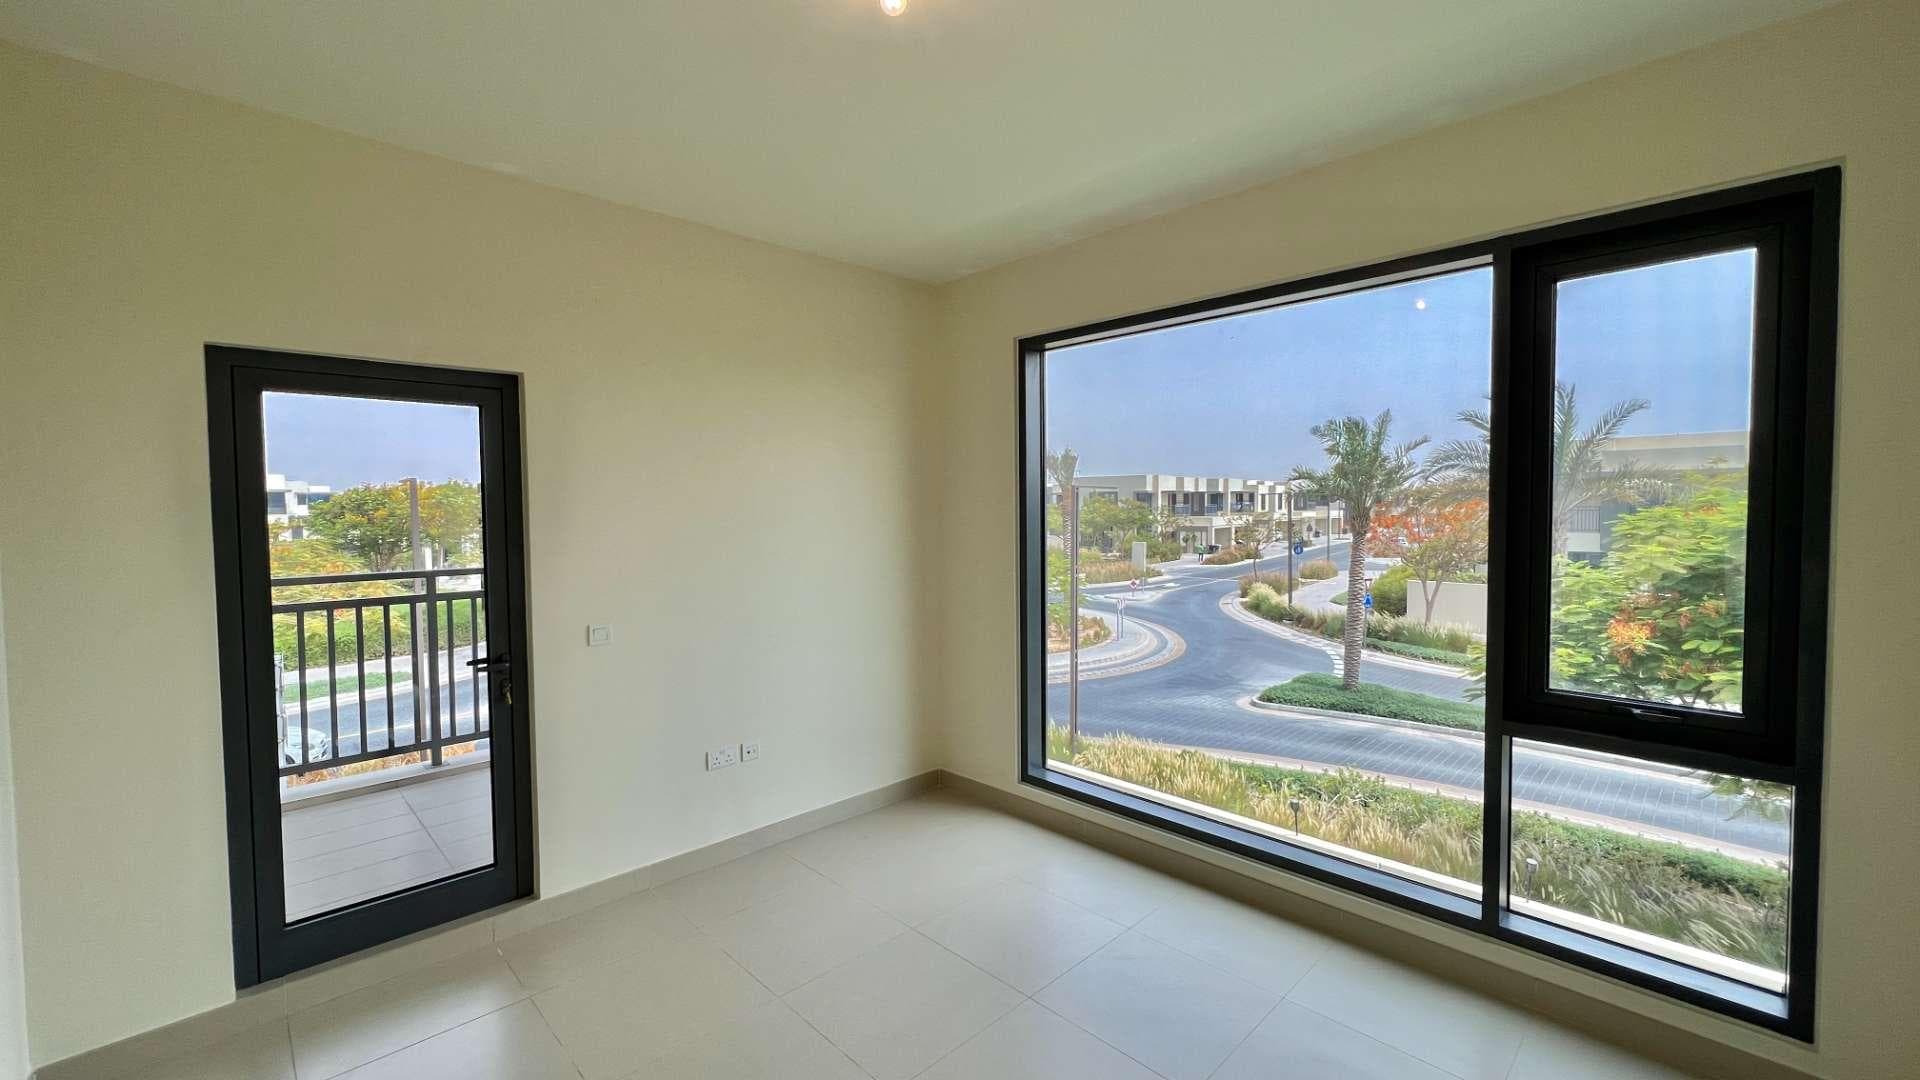 4 Bedroom Villa For Rent Maple At Dubai Hills Estate Lp34638 15f52e28a7ce9d00.jpg